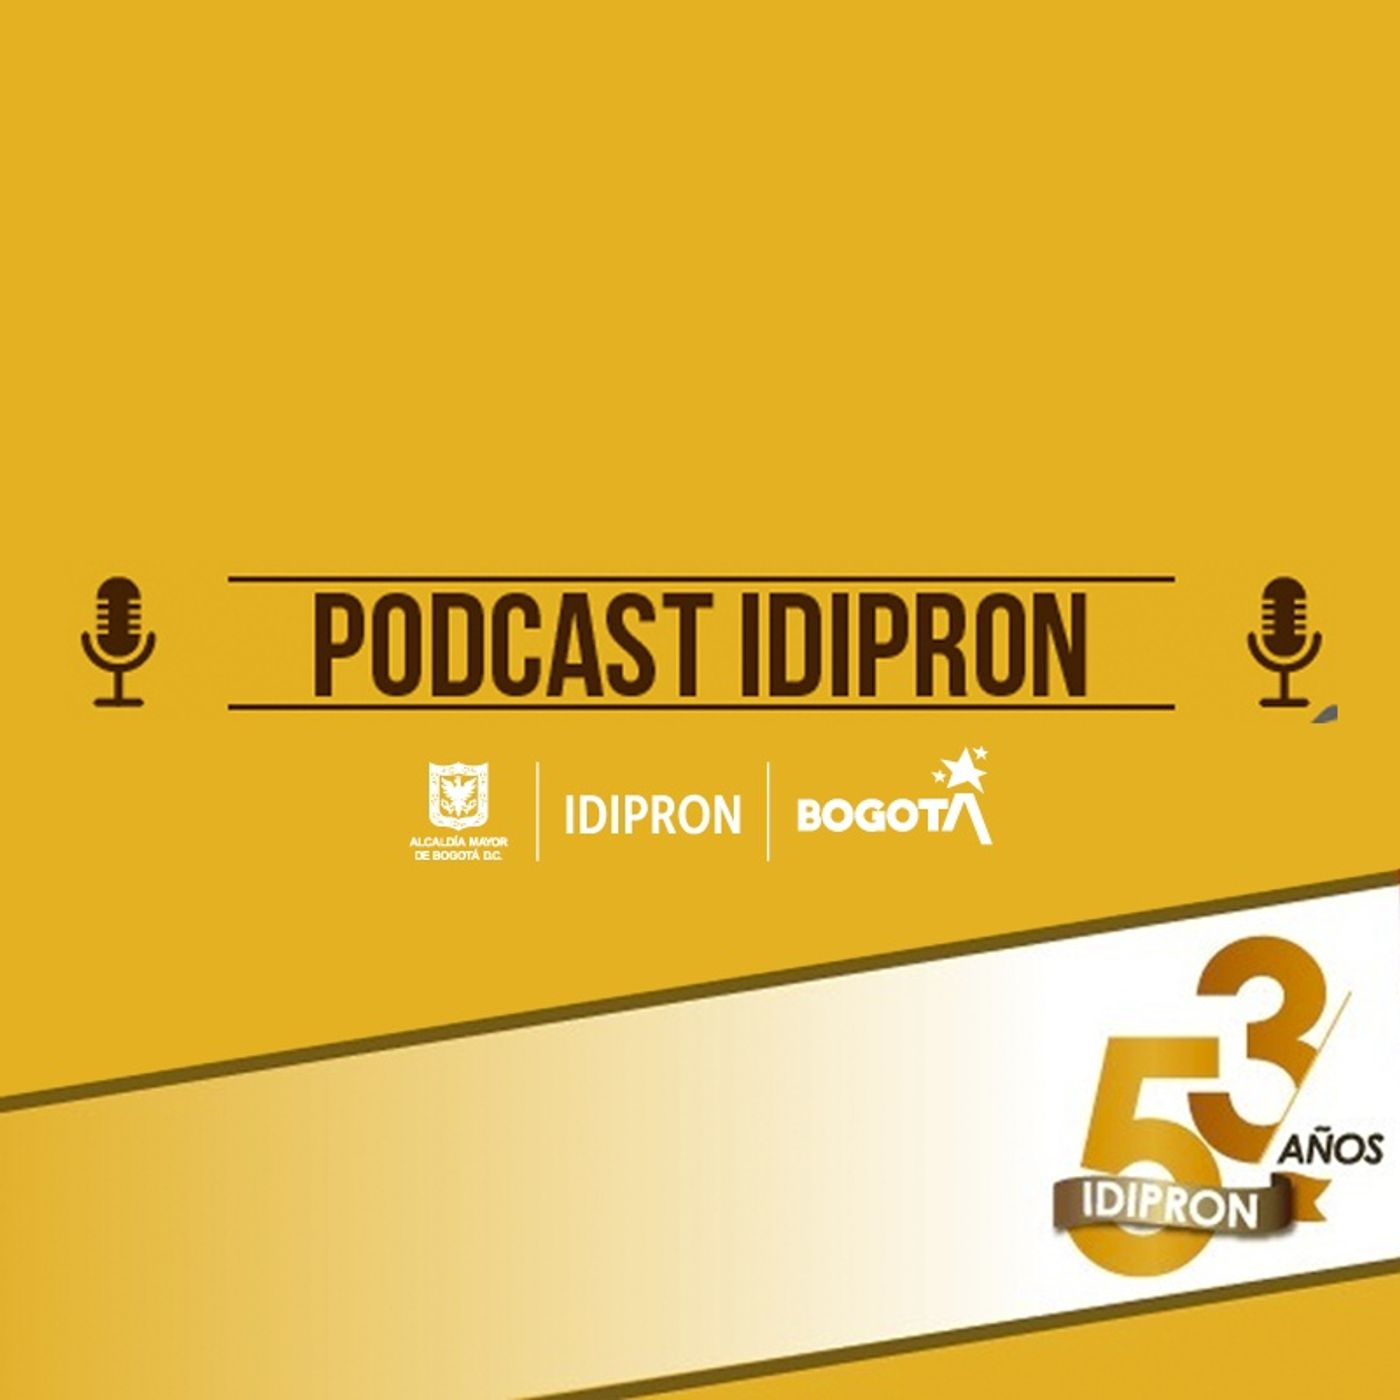 Podcast IDIPRON Bogotá